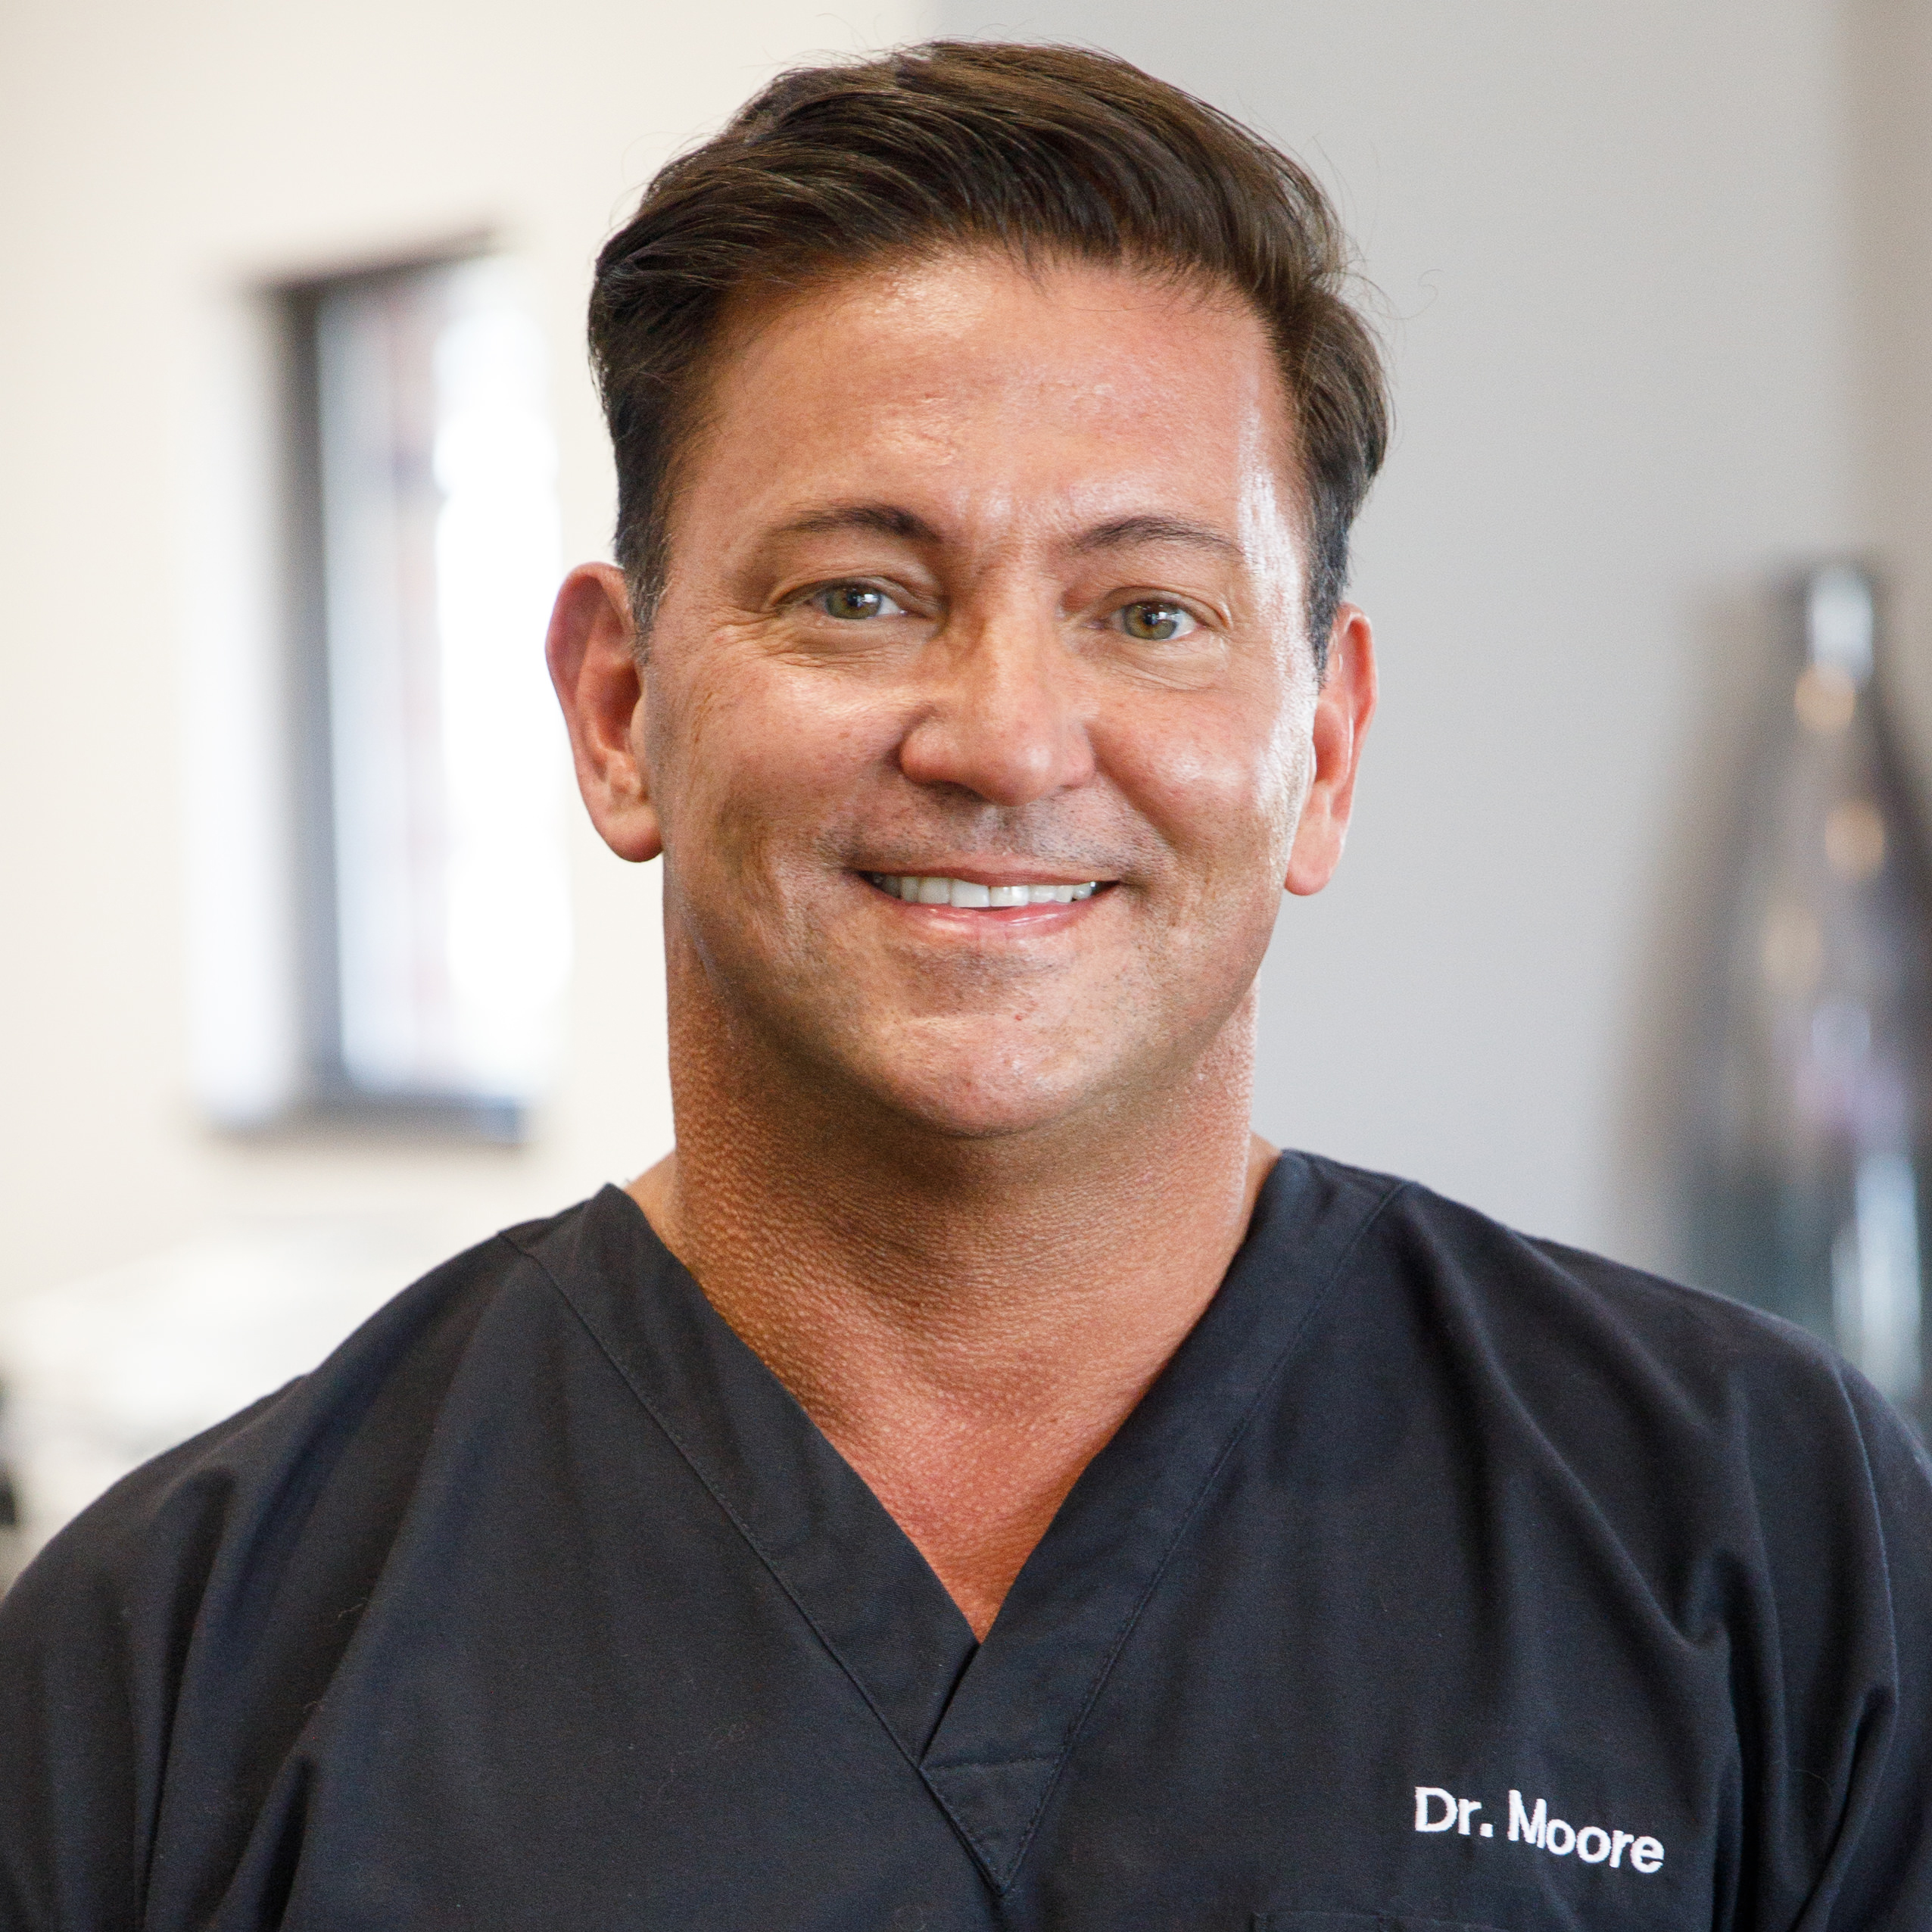 Dr. Moore, Your Dental Care Partner